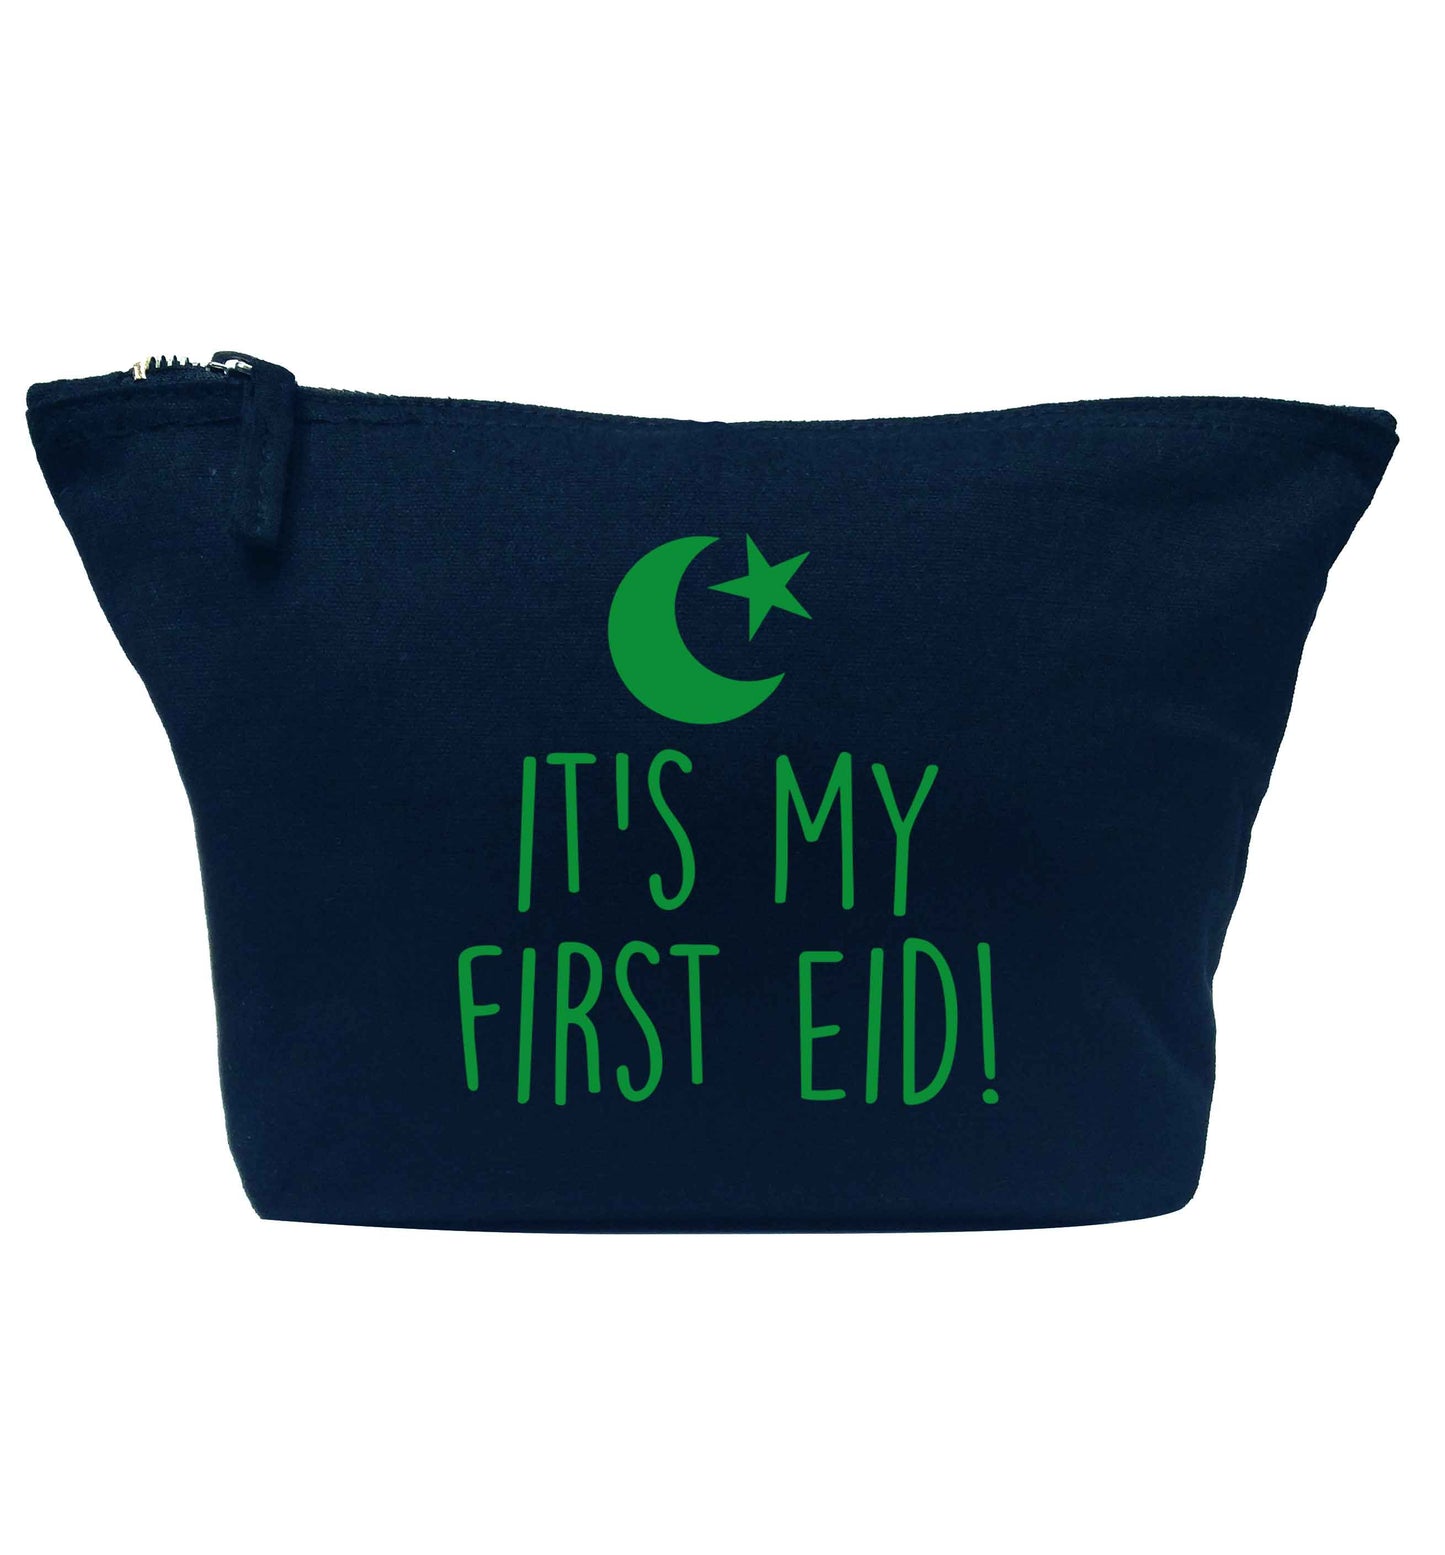 It's my first Eid navy makeup bag